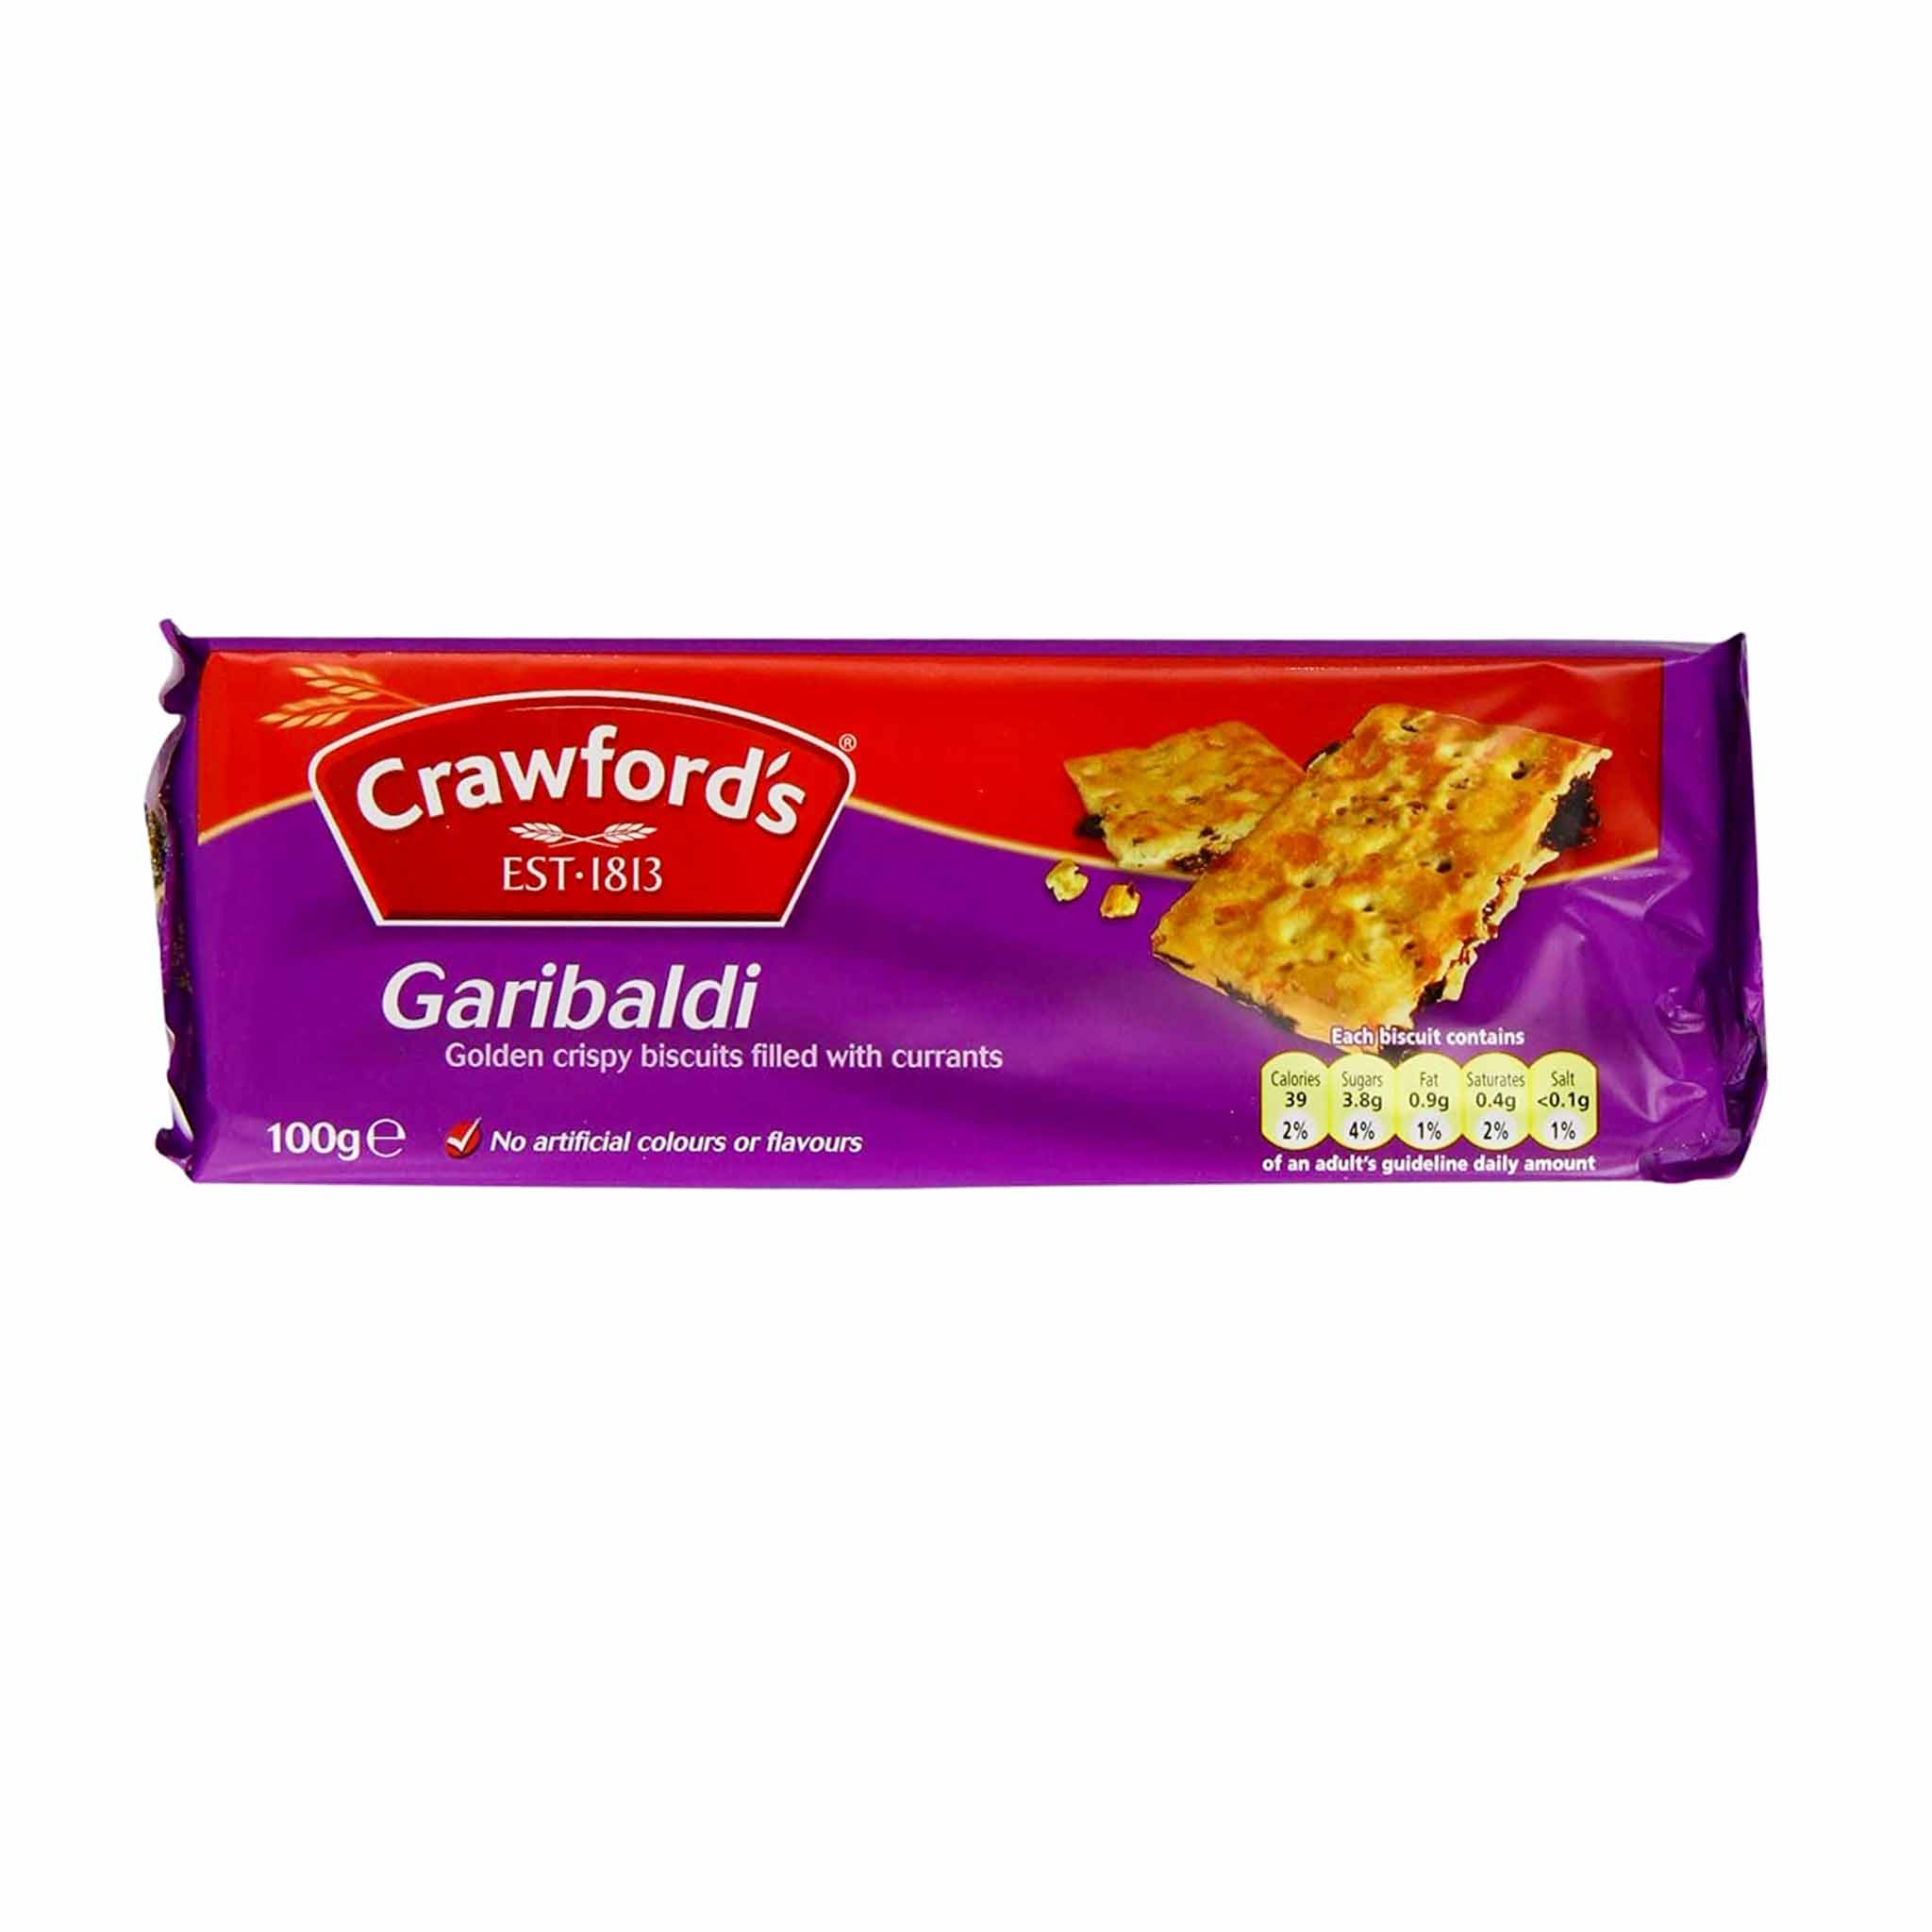 CRAWFORDS GARIBALDI BISCUITS 100g